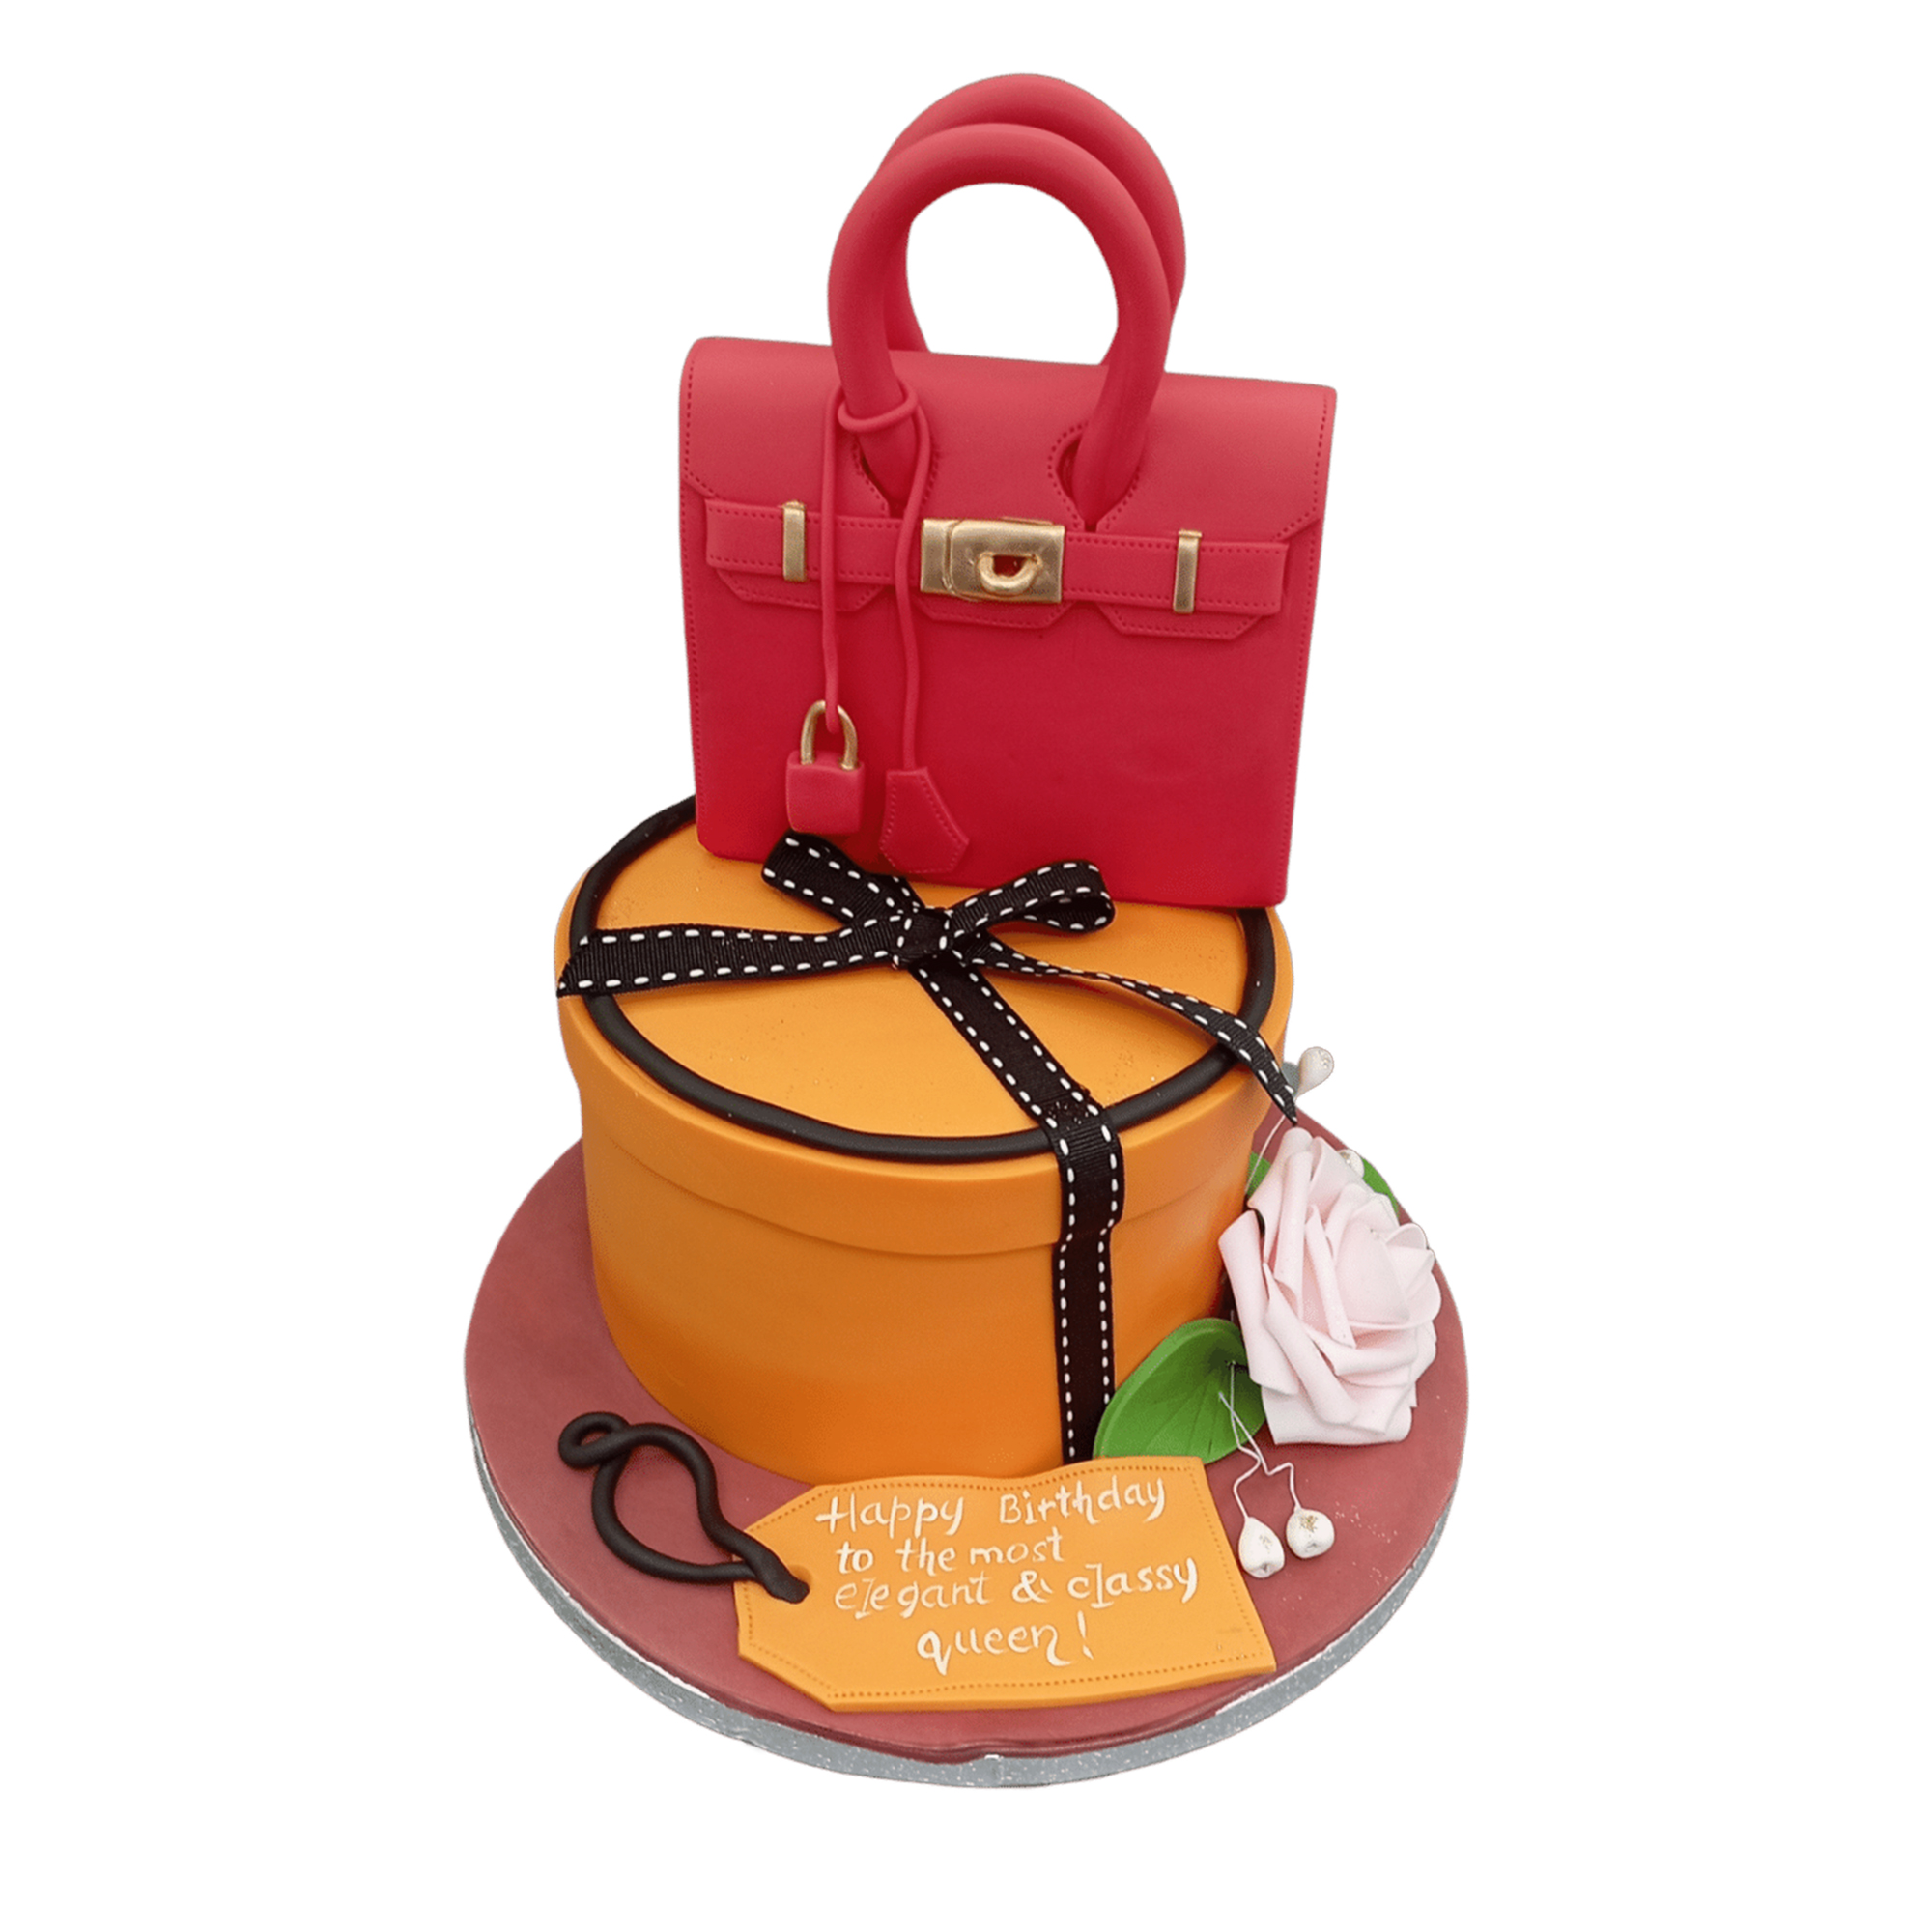 Branded Bag Cake